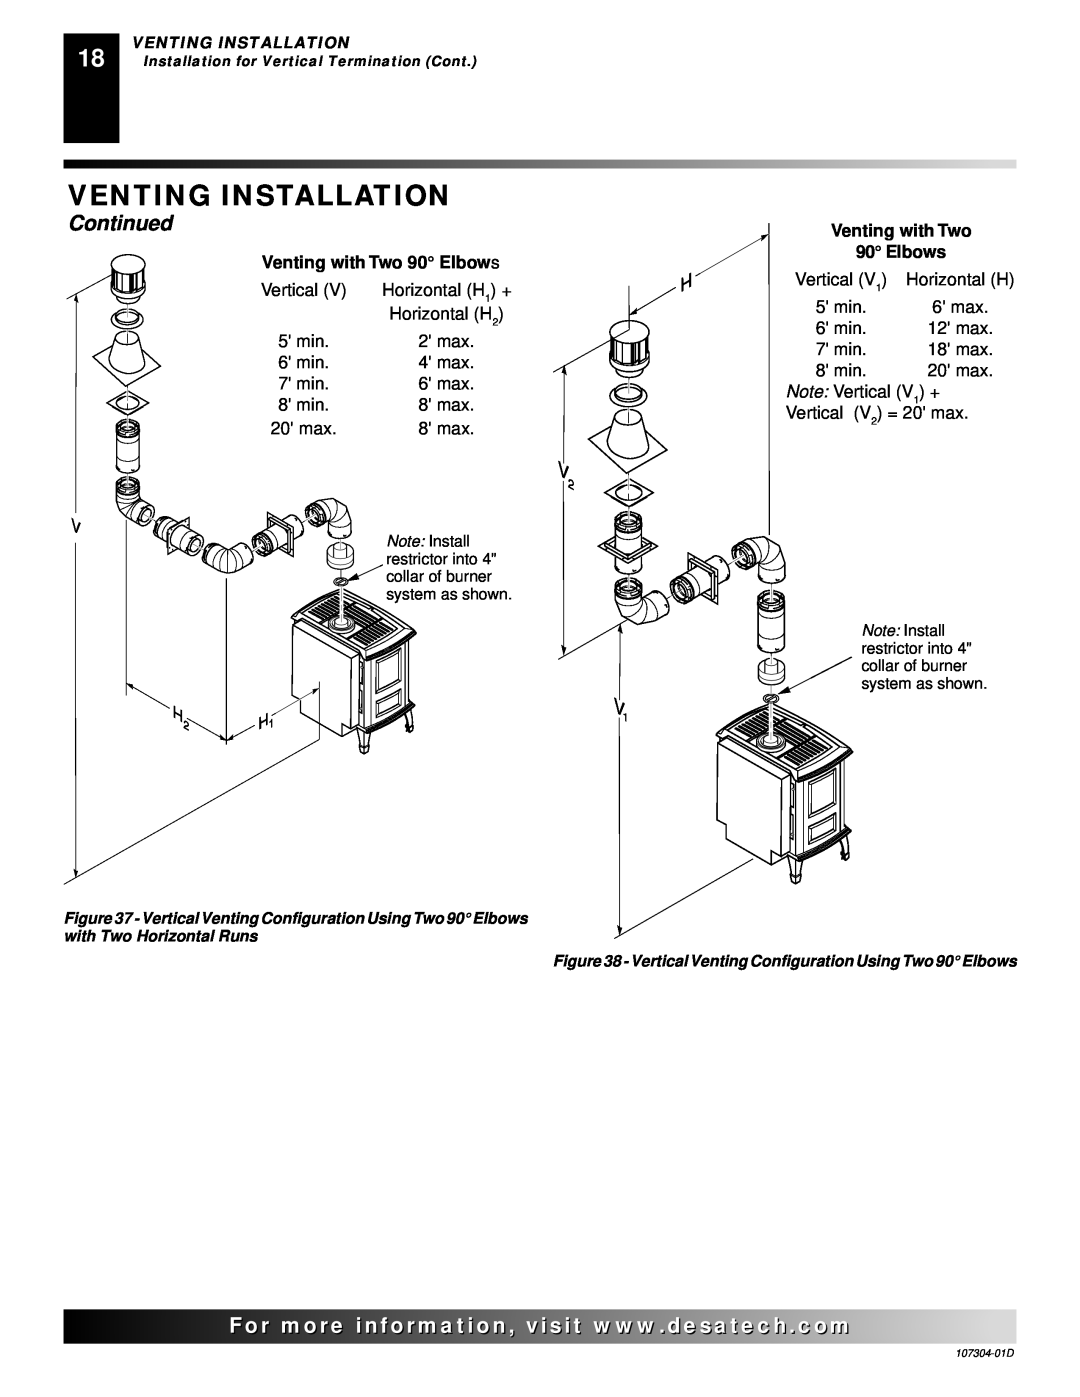 Desa SDVBPC, SDVBNC installation manual Venting Installation, Continued, Vertical 